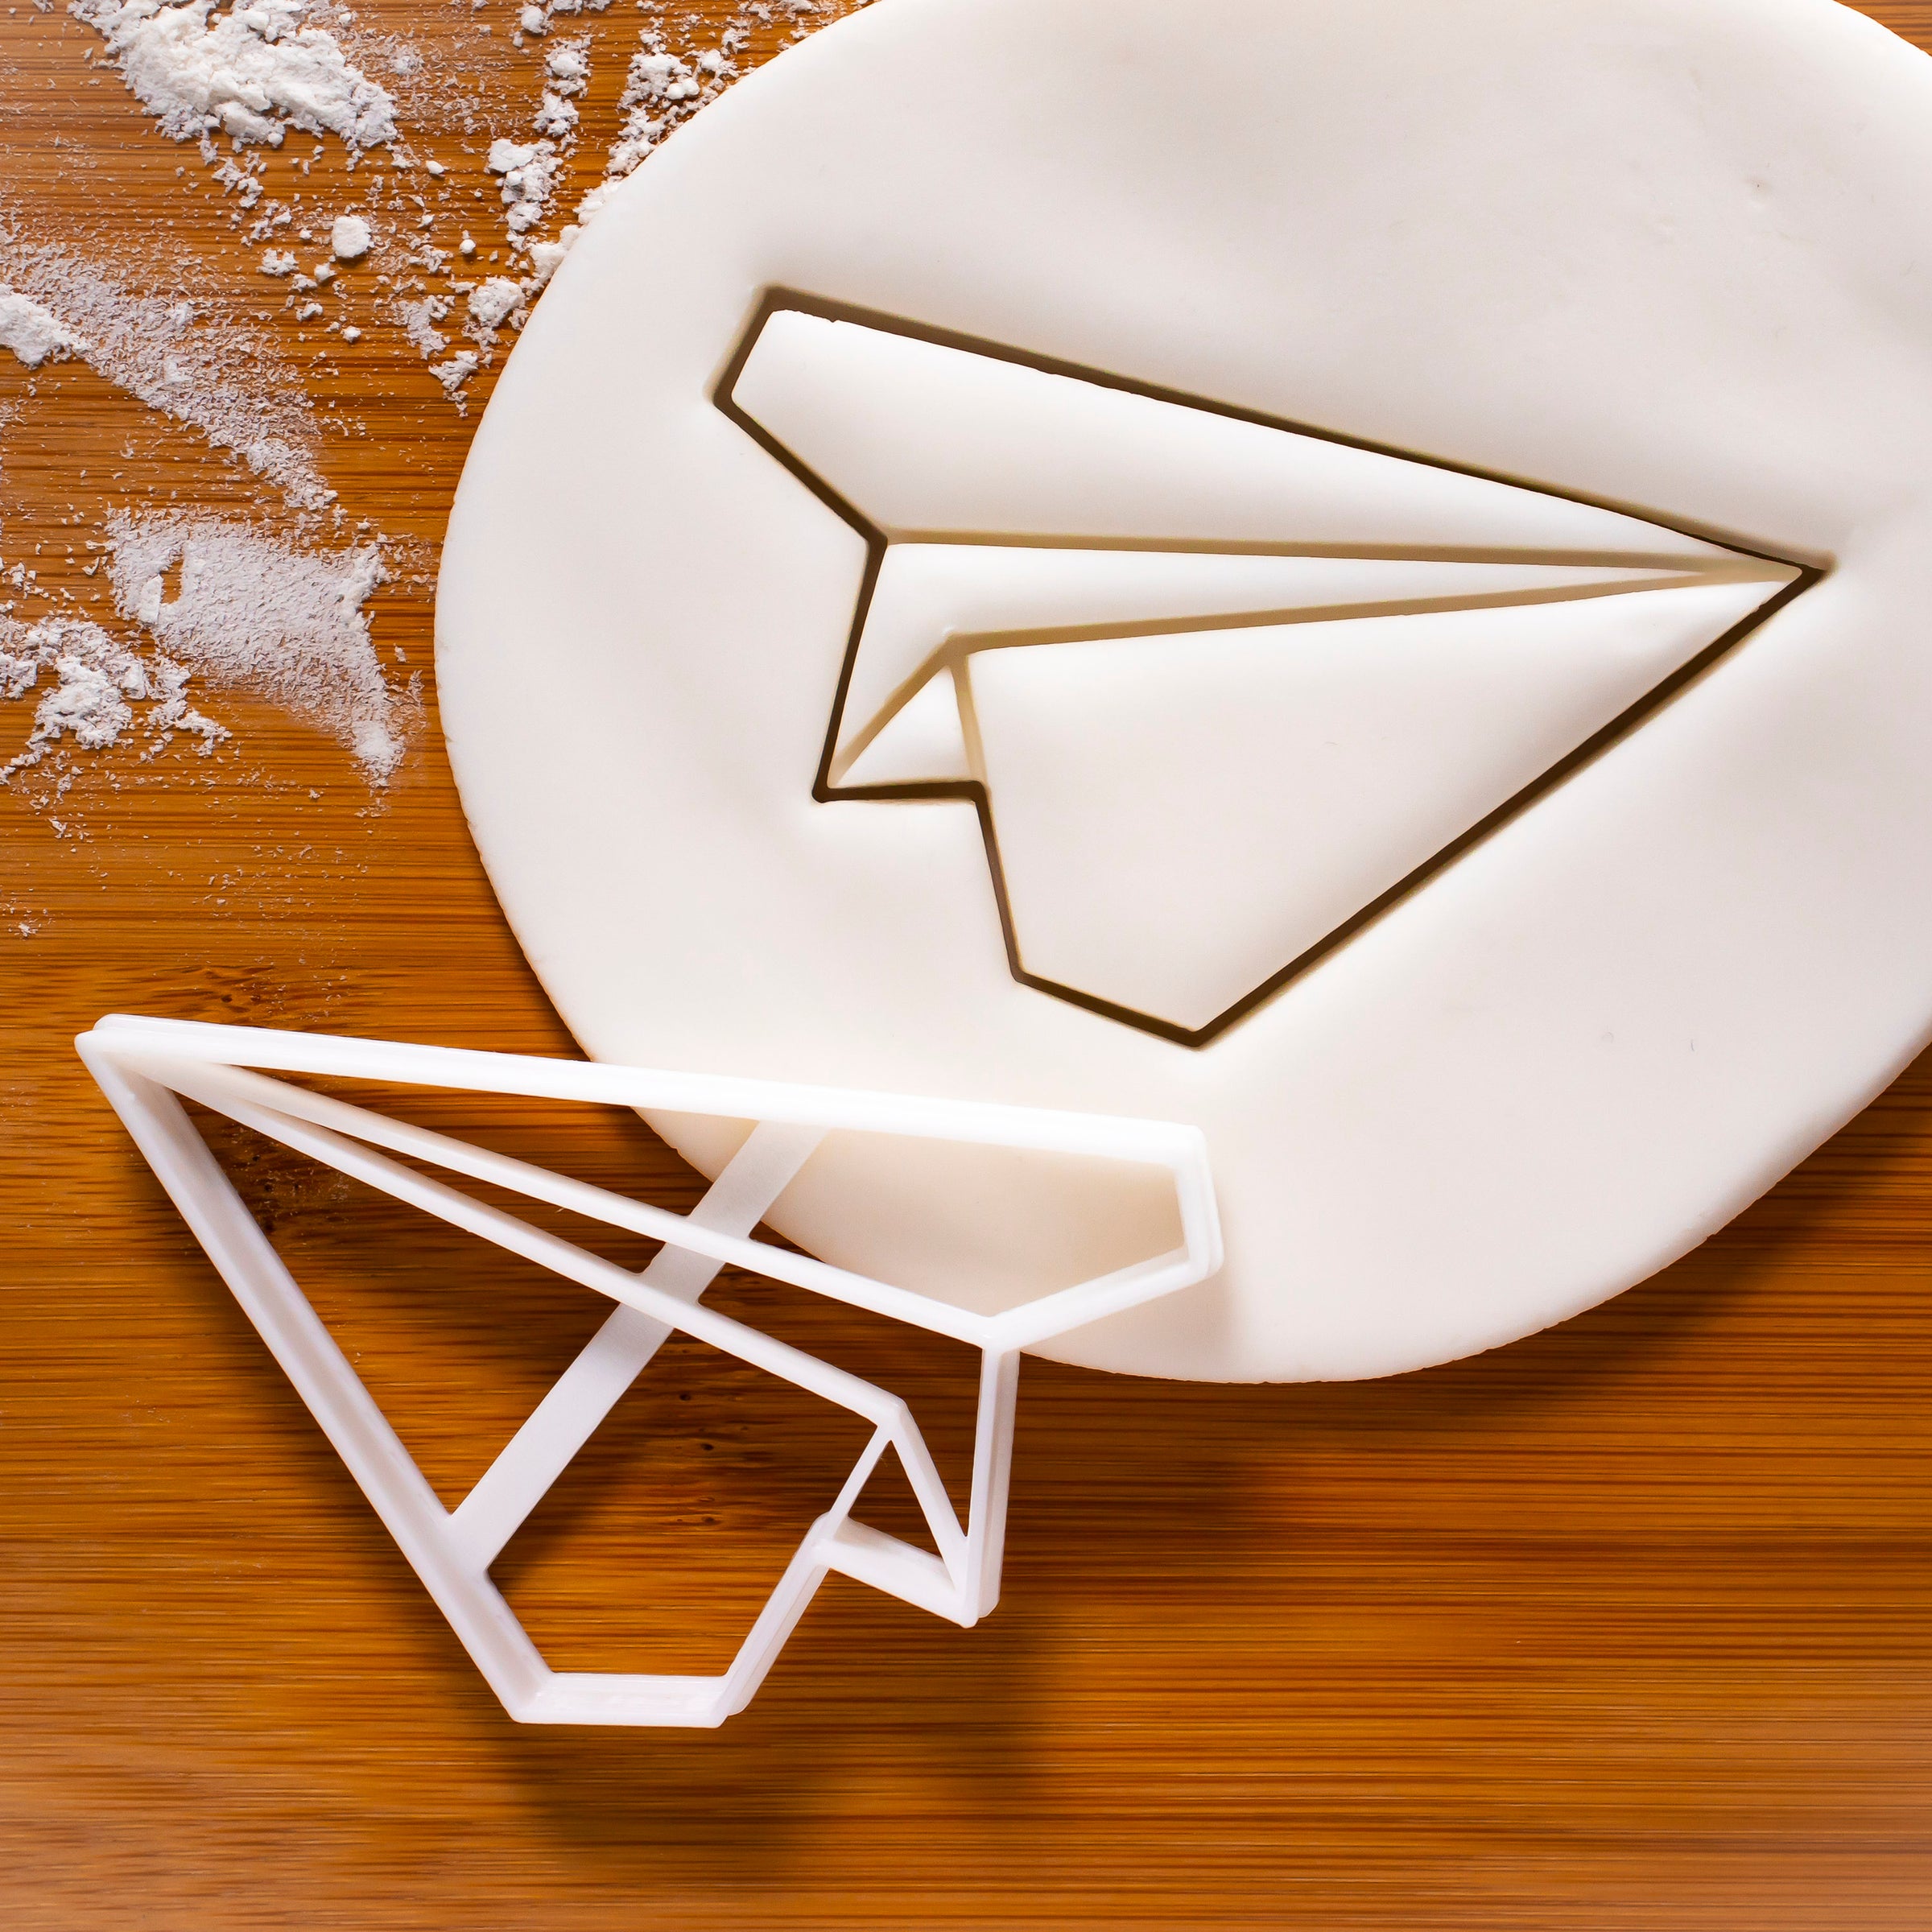 origami plane cookie cutter